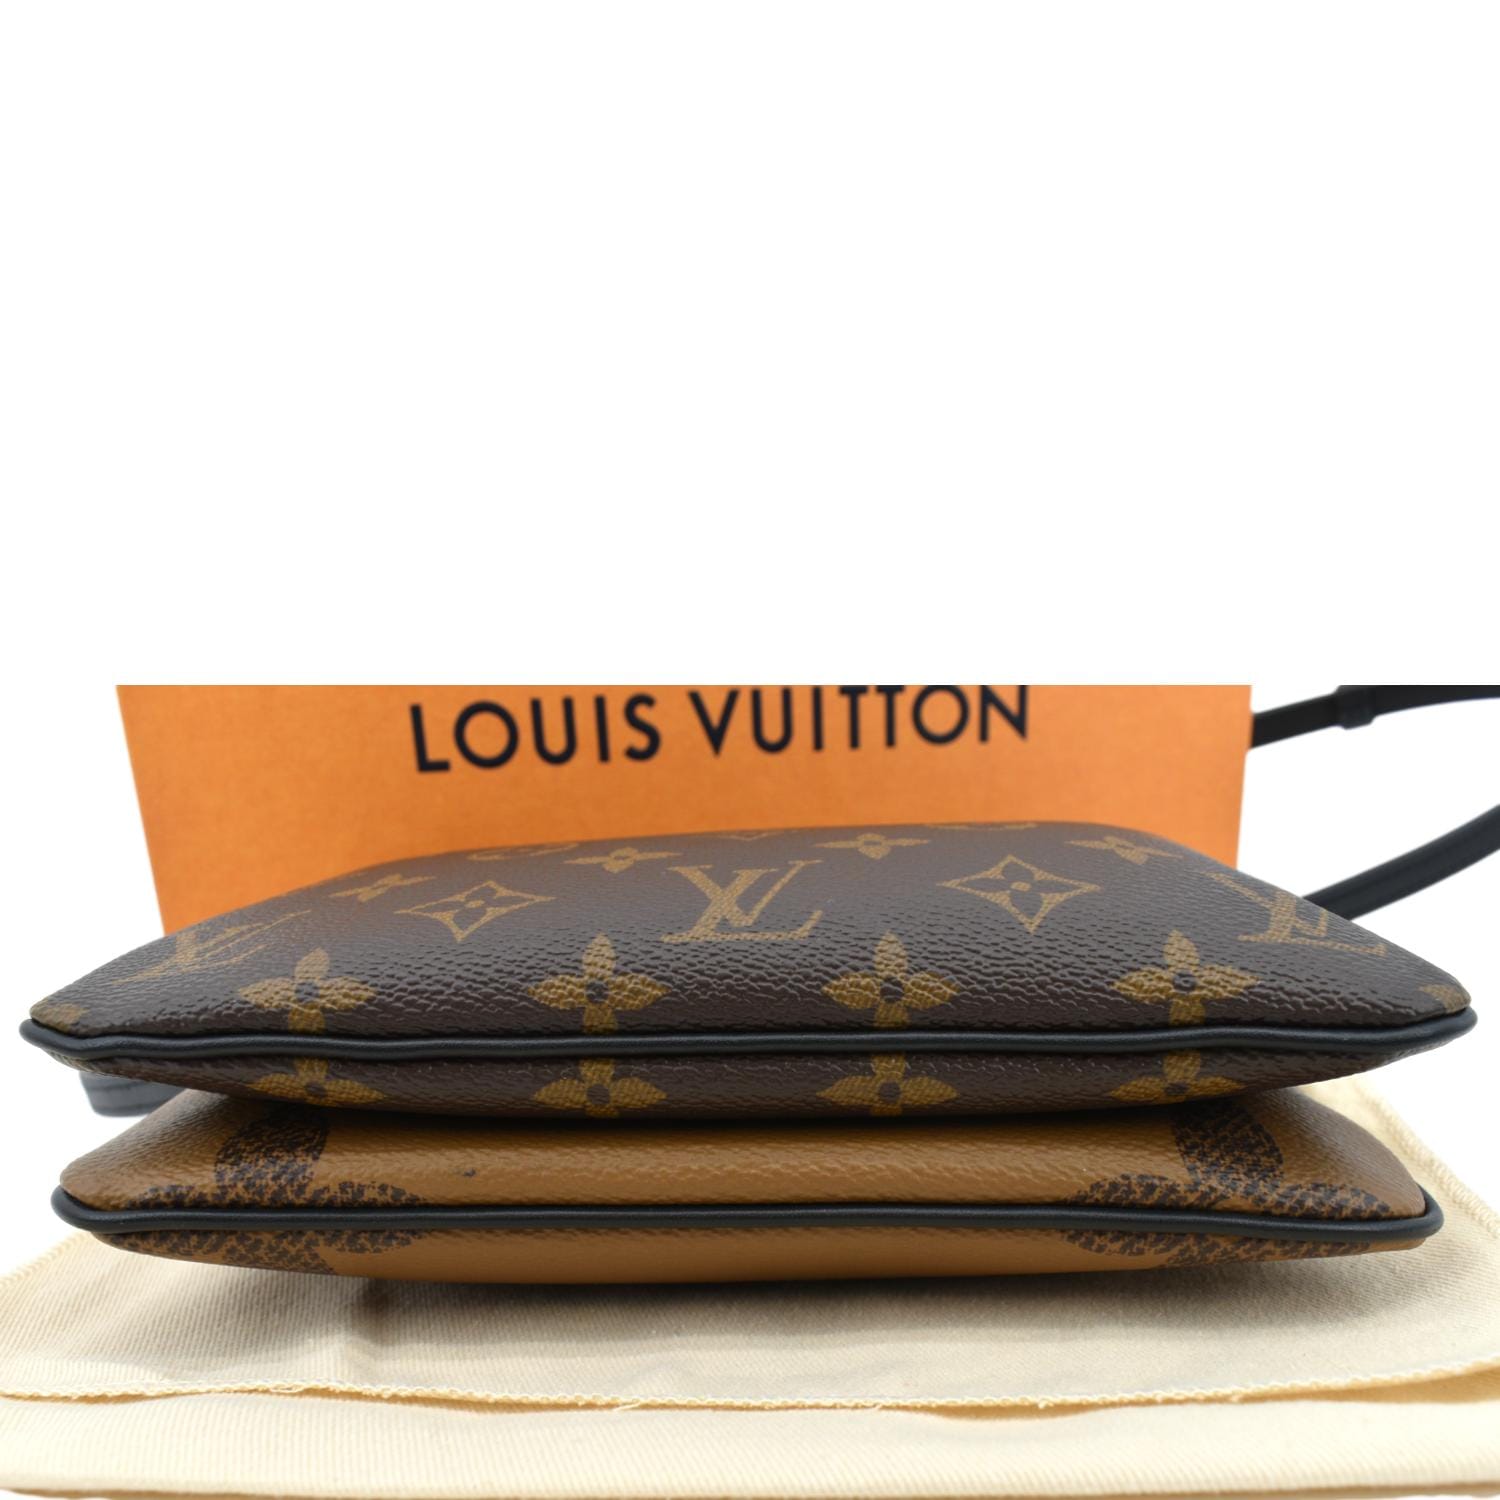 Louis Vuitton Reverse Monogram Short Zippy Wallet. Made in France